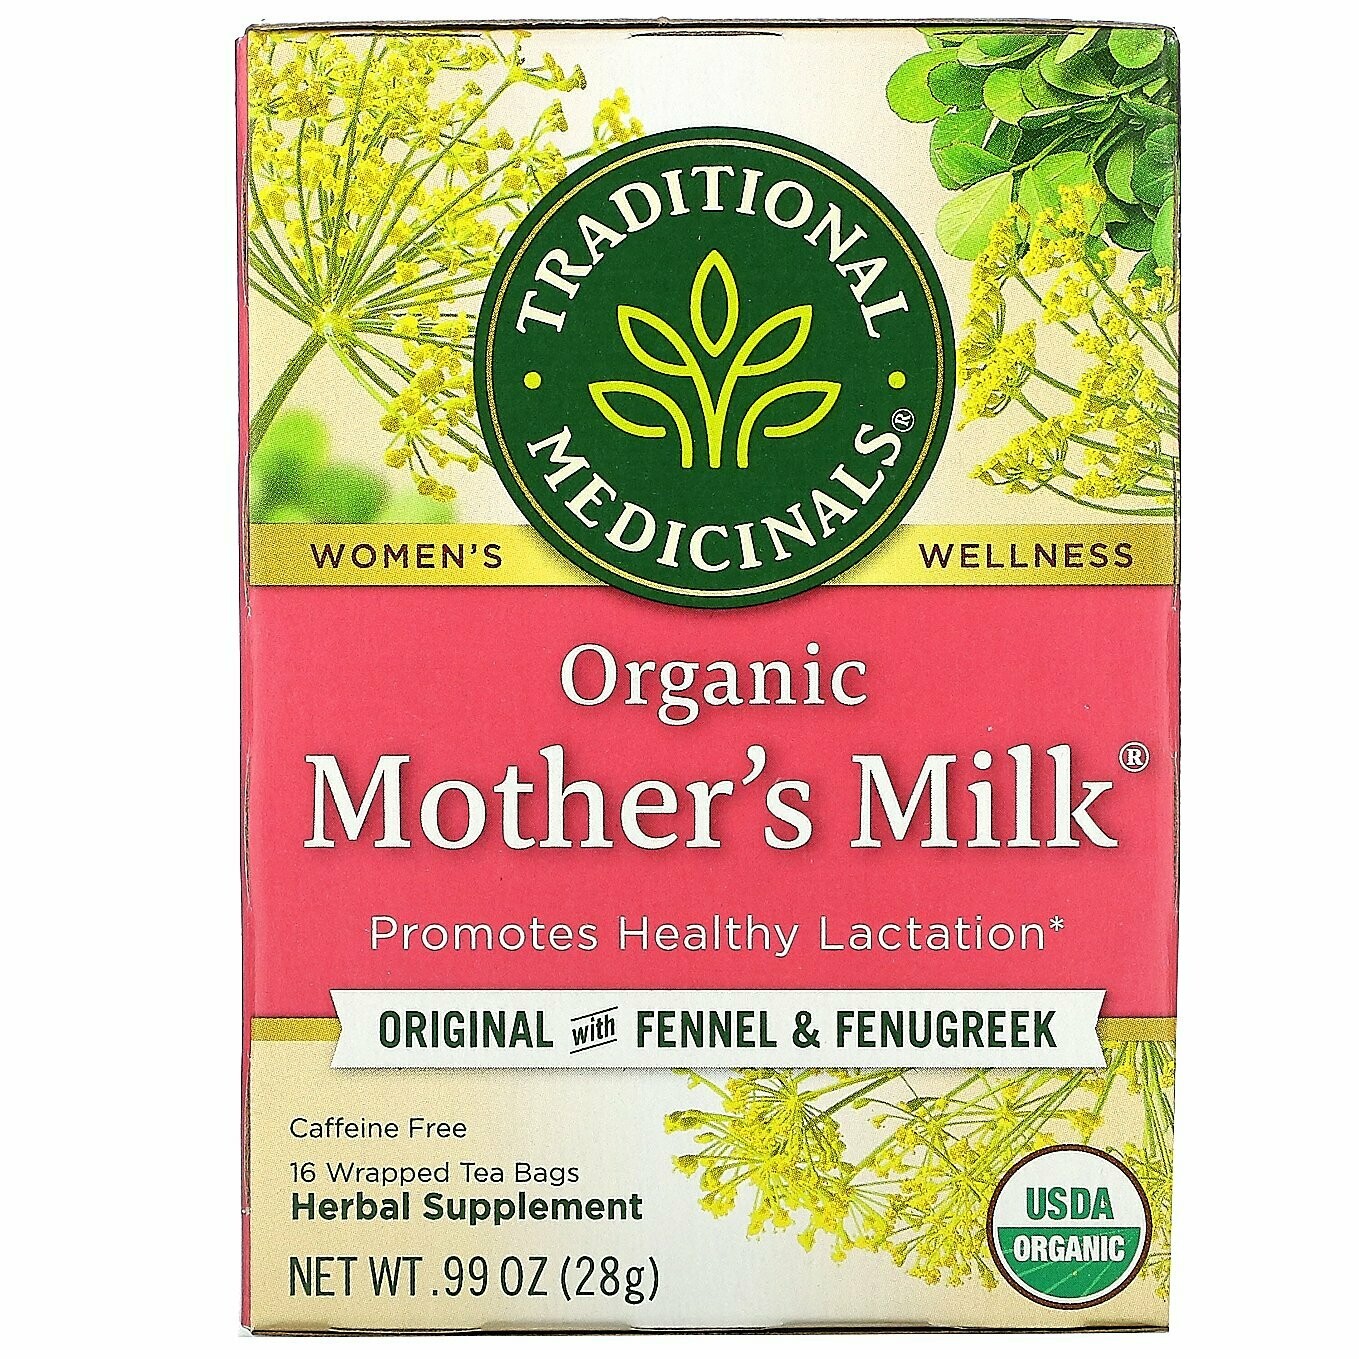 Organic Mother's Milk Original with Fennel & Fenugreek